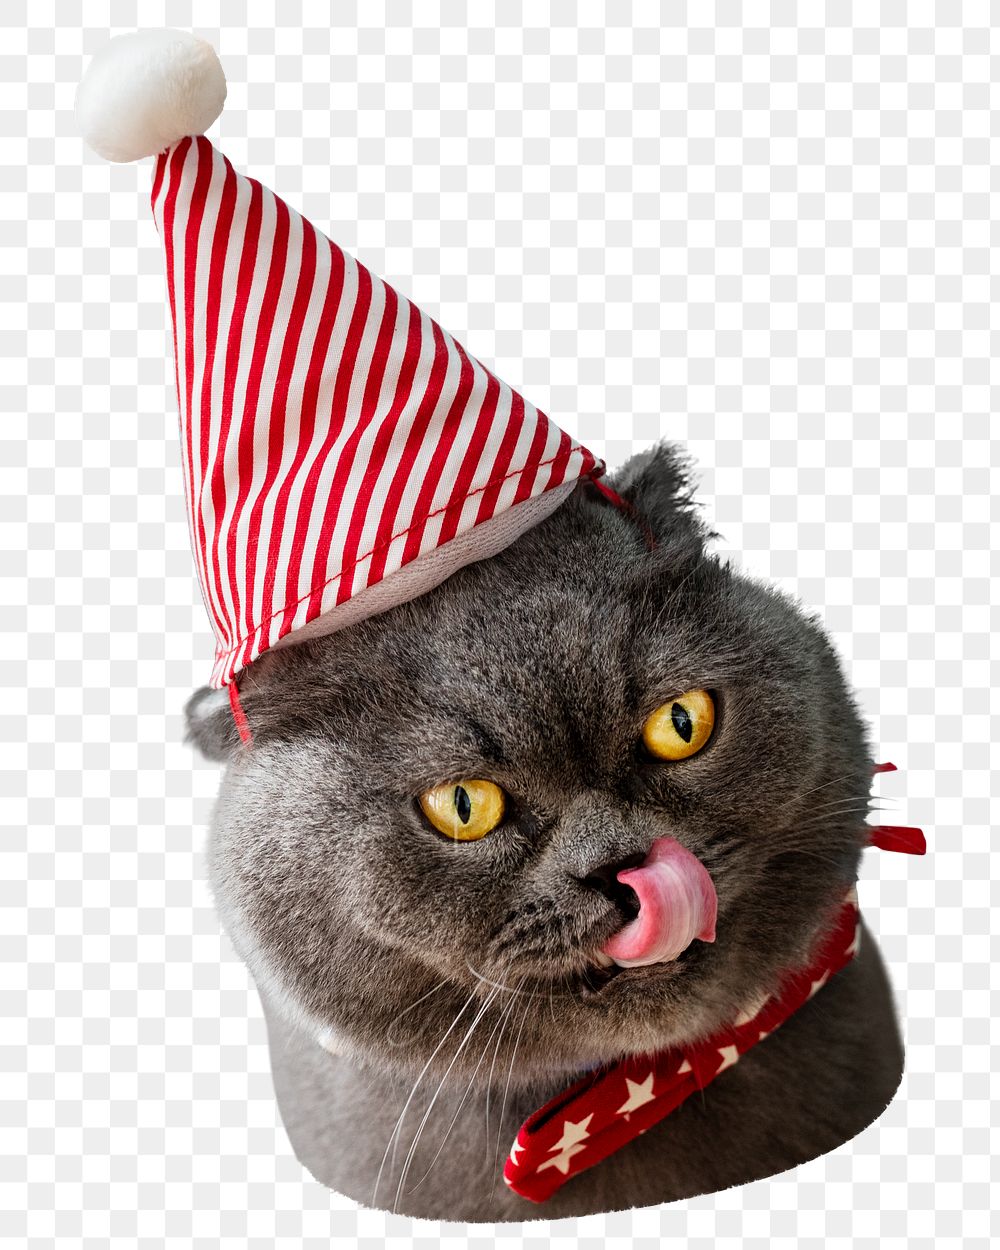 Cat wearing png birthday hat sticker, transparent background